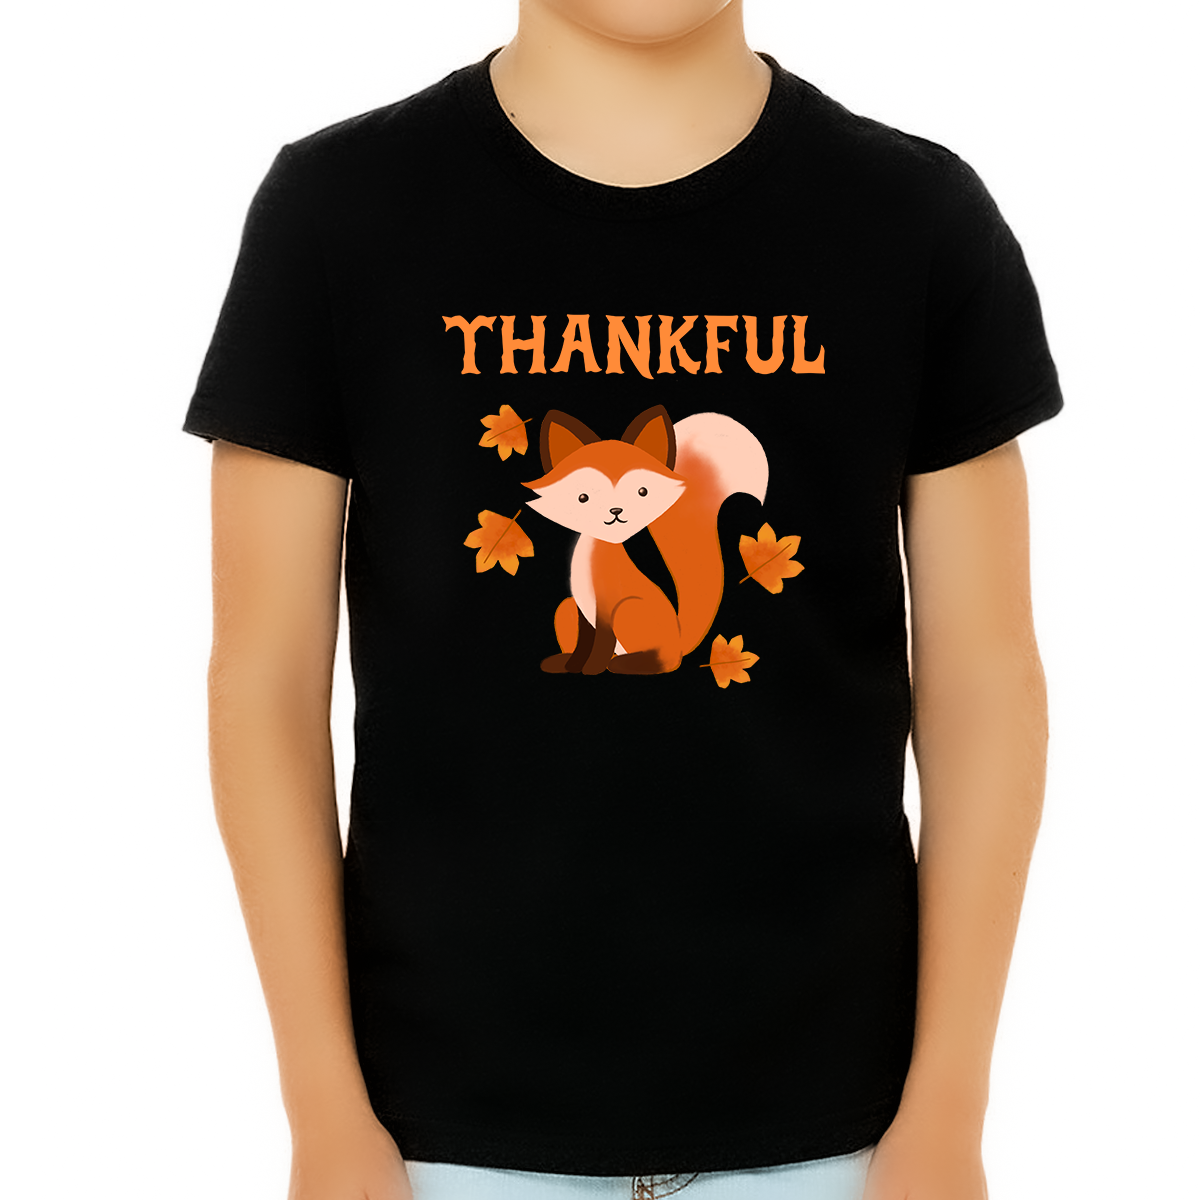 Cute Thanksgiving Shirts for Boys Thanksgiving Gifts Thanksgiving Shirts for Kids Kids Thanksgiving Shirt